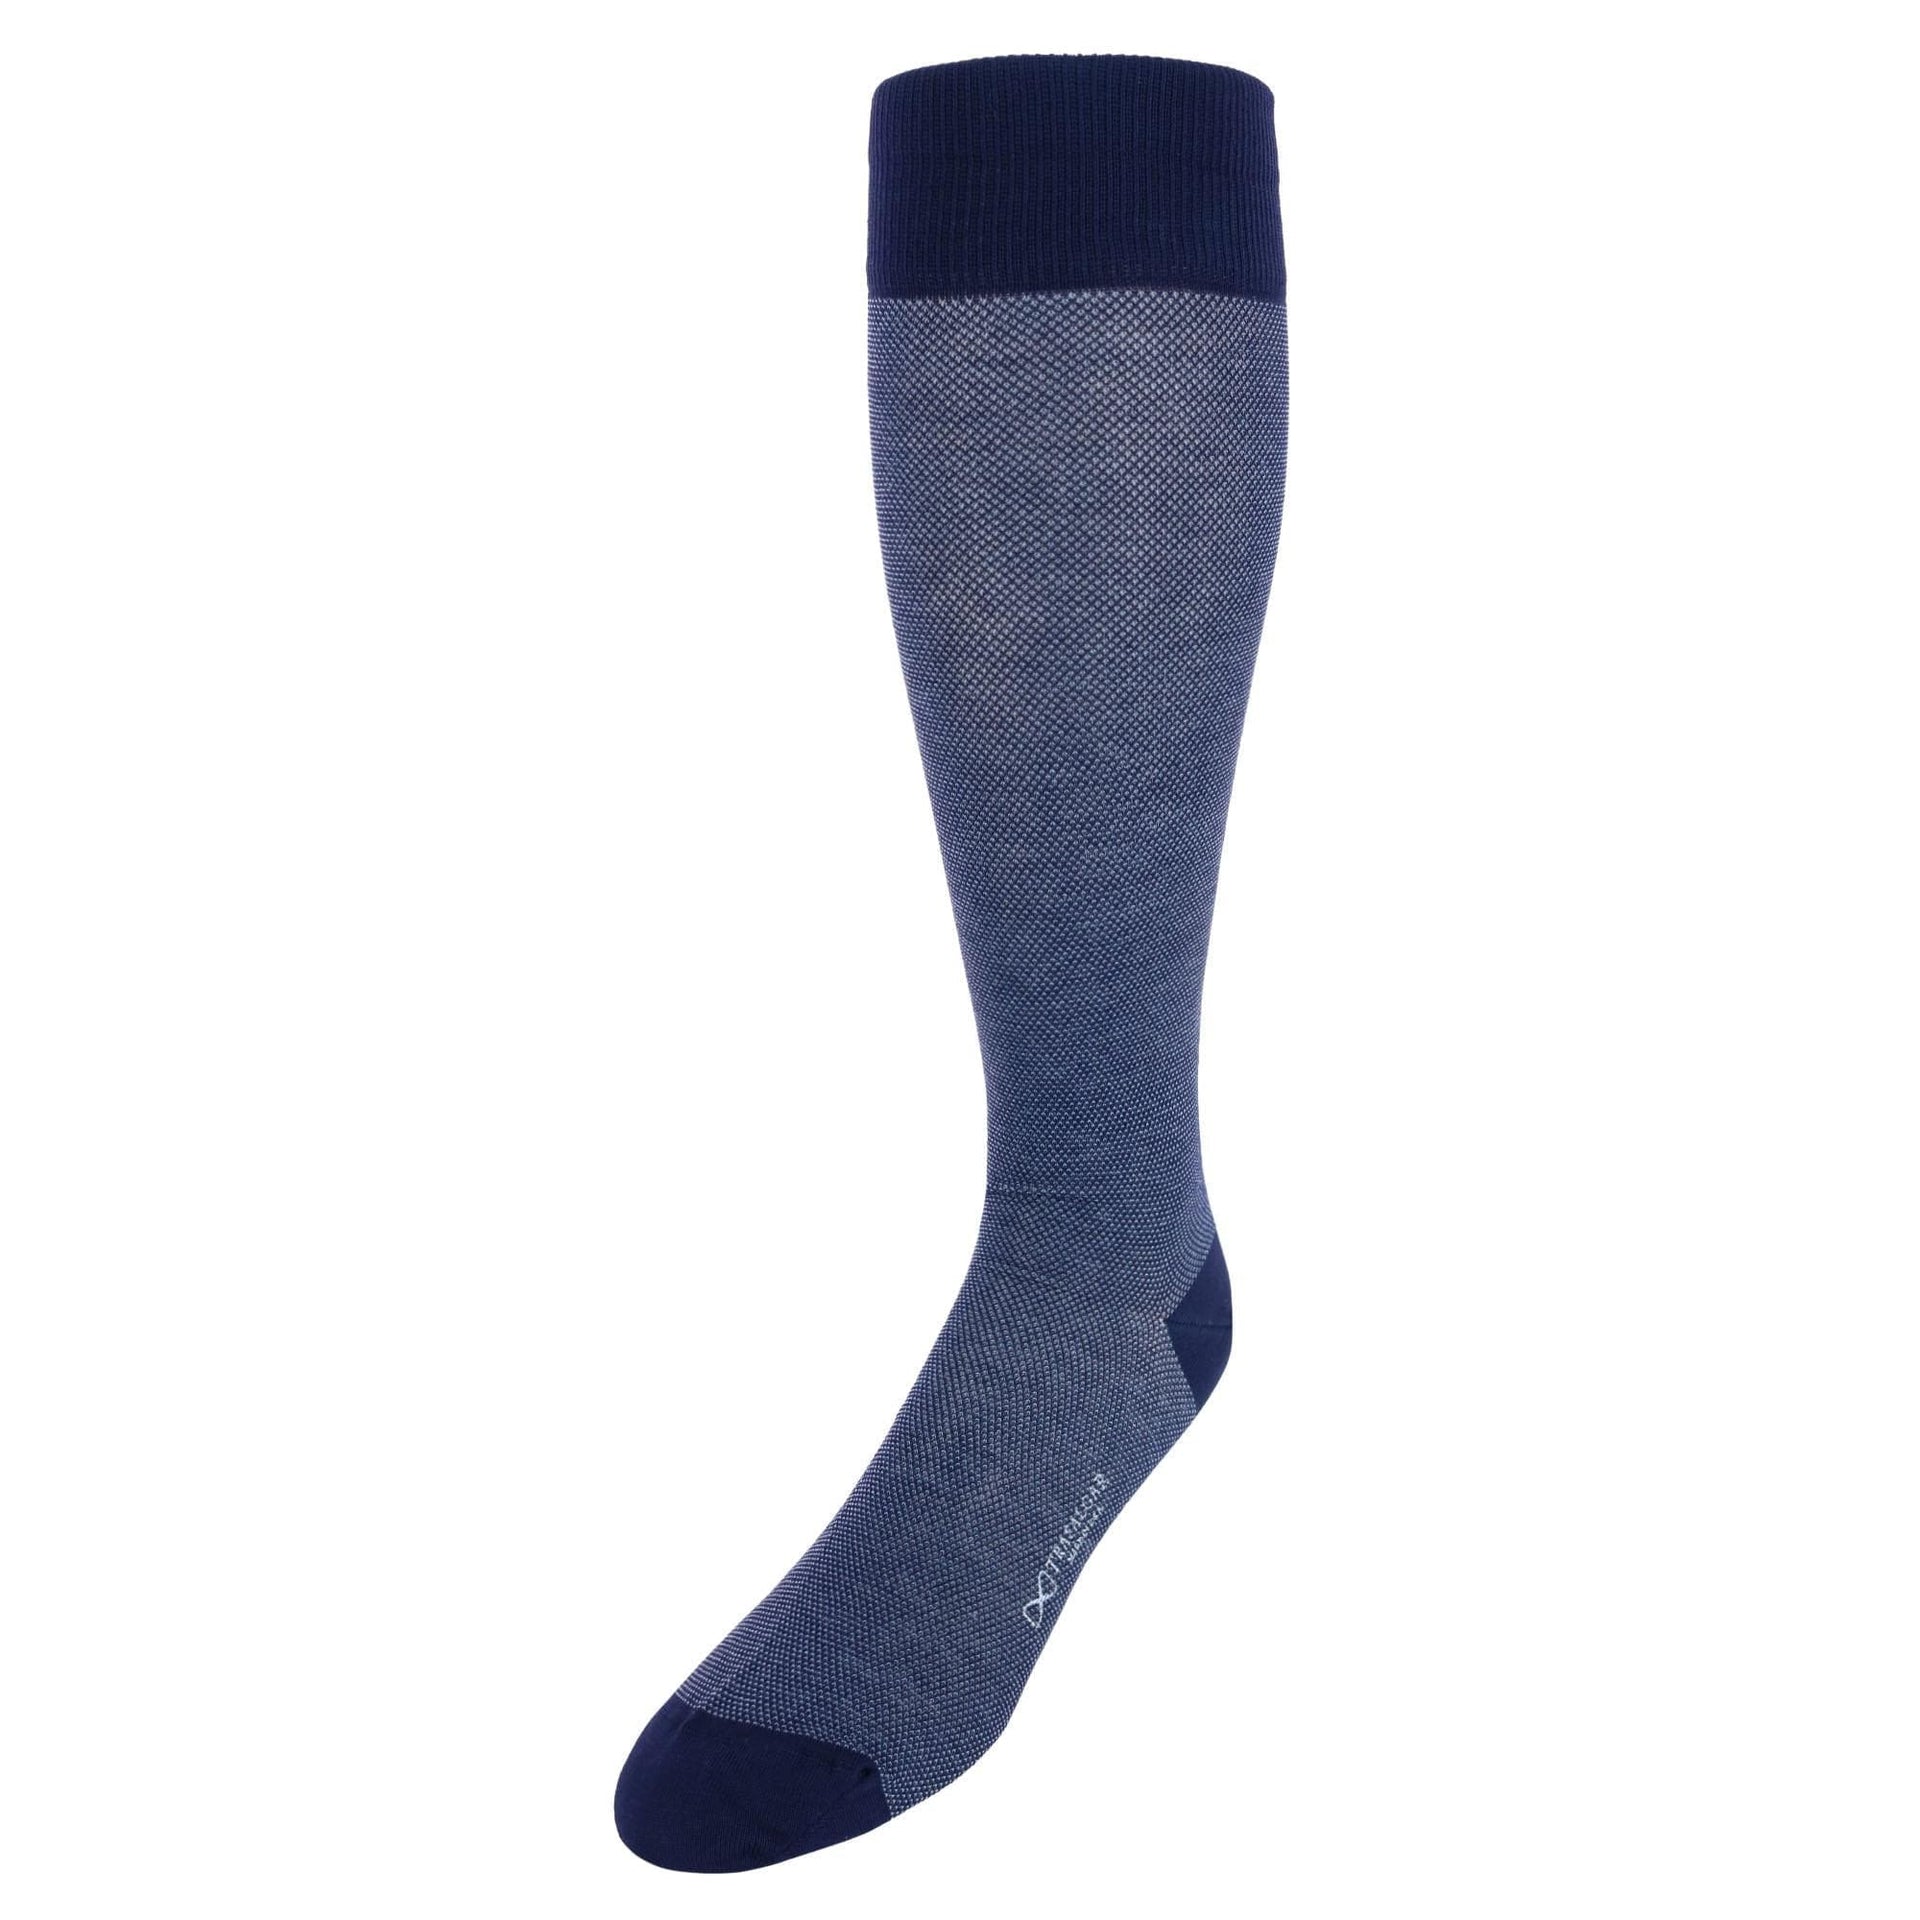 LV socks  Designer socks, Socks, Pretty outfits